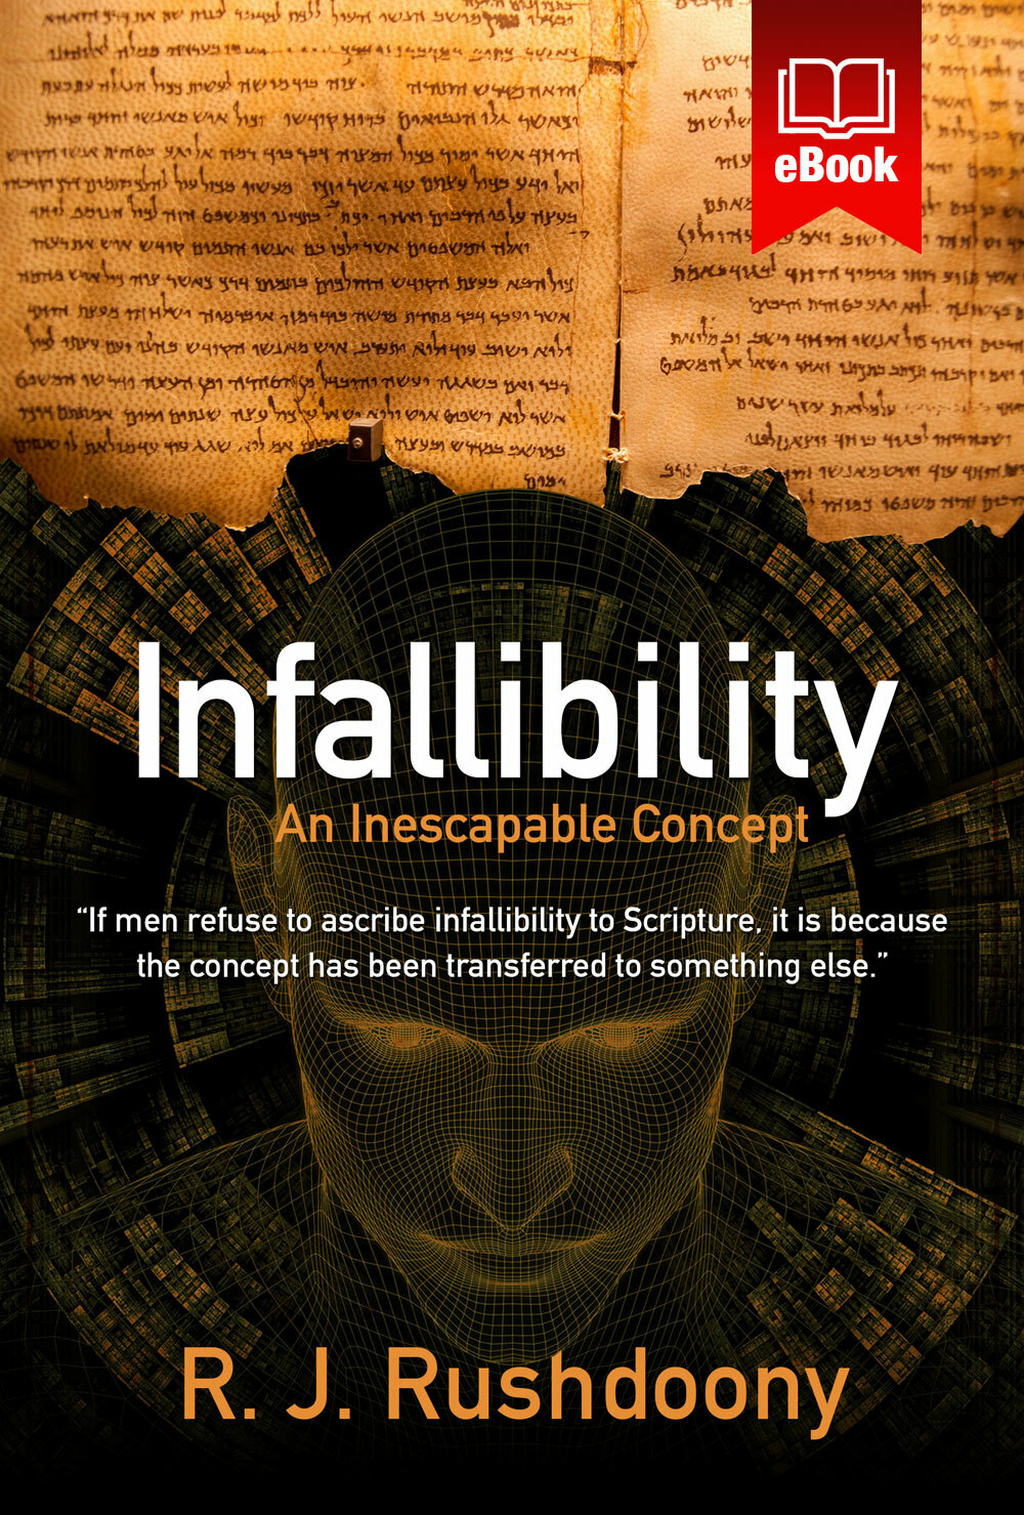 Infallibility Inescapable ebook